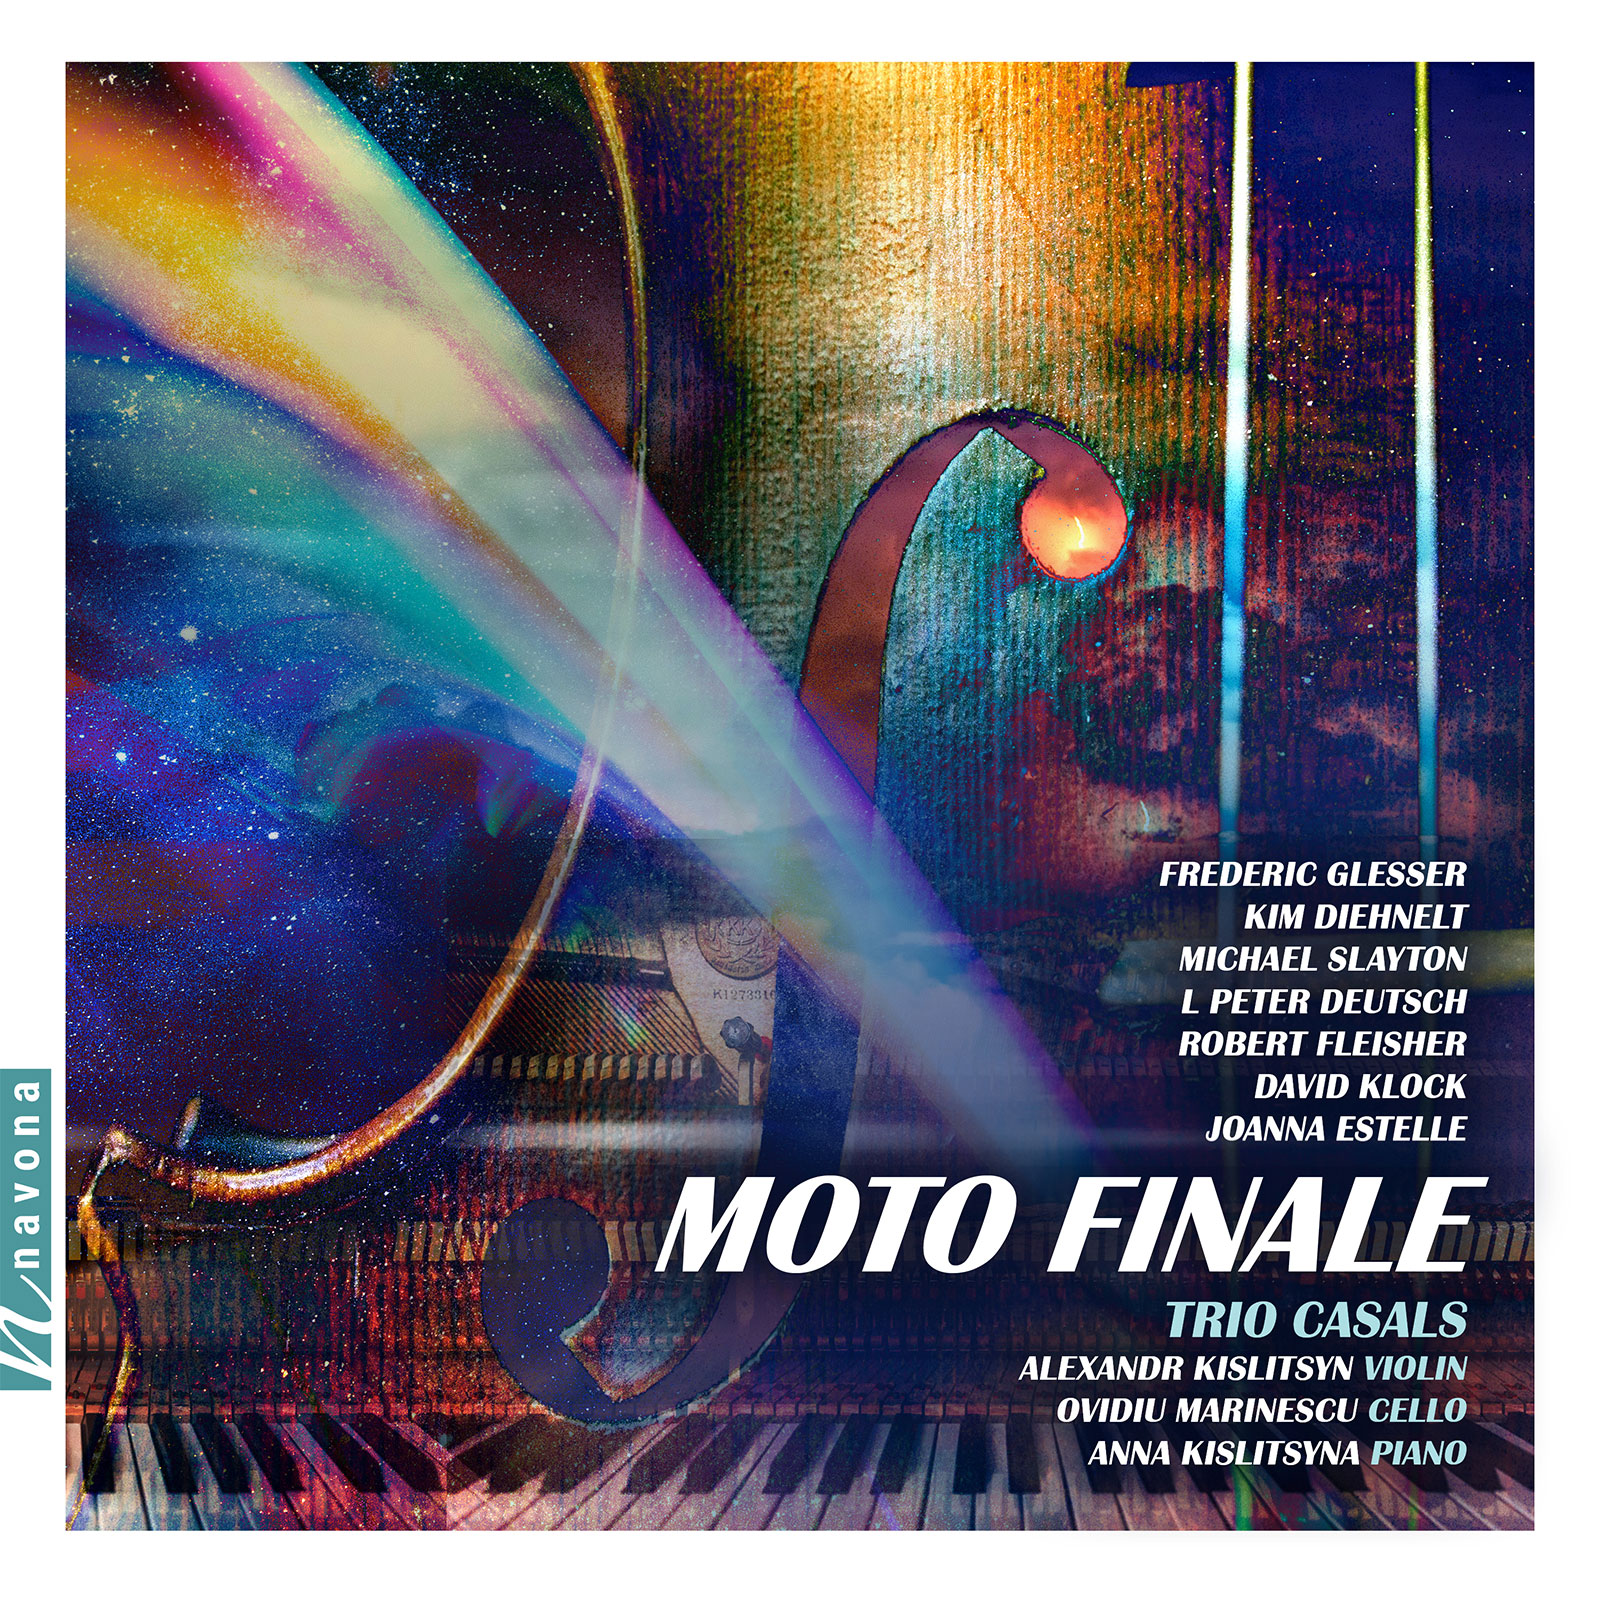 MOTO FINALE - Trio Casals - Album Cover